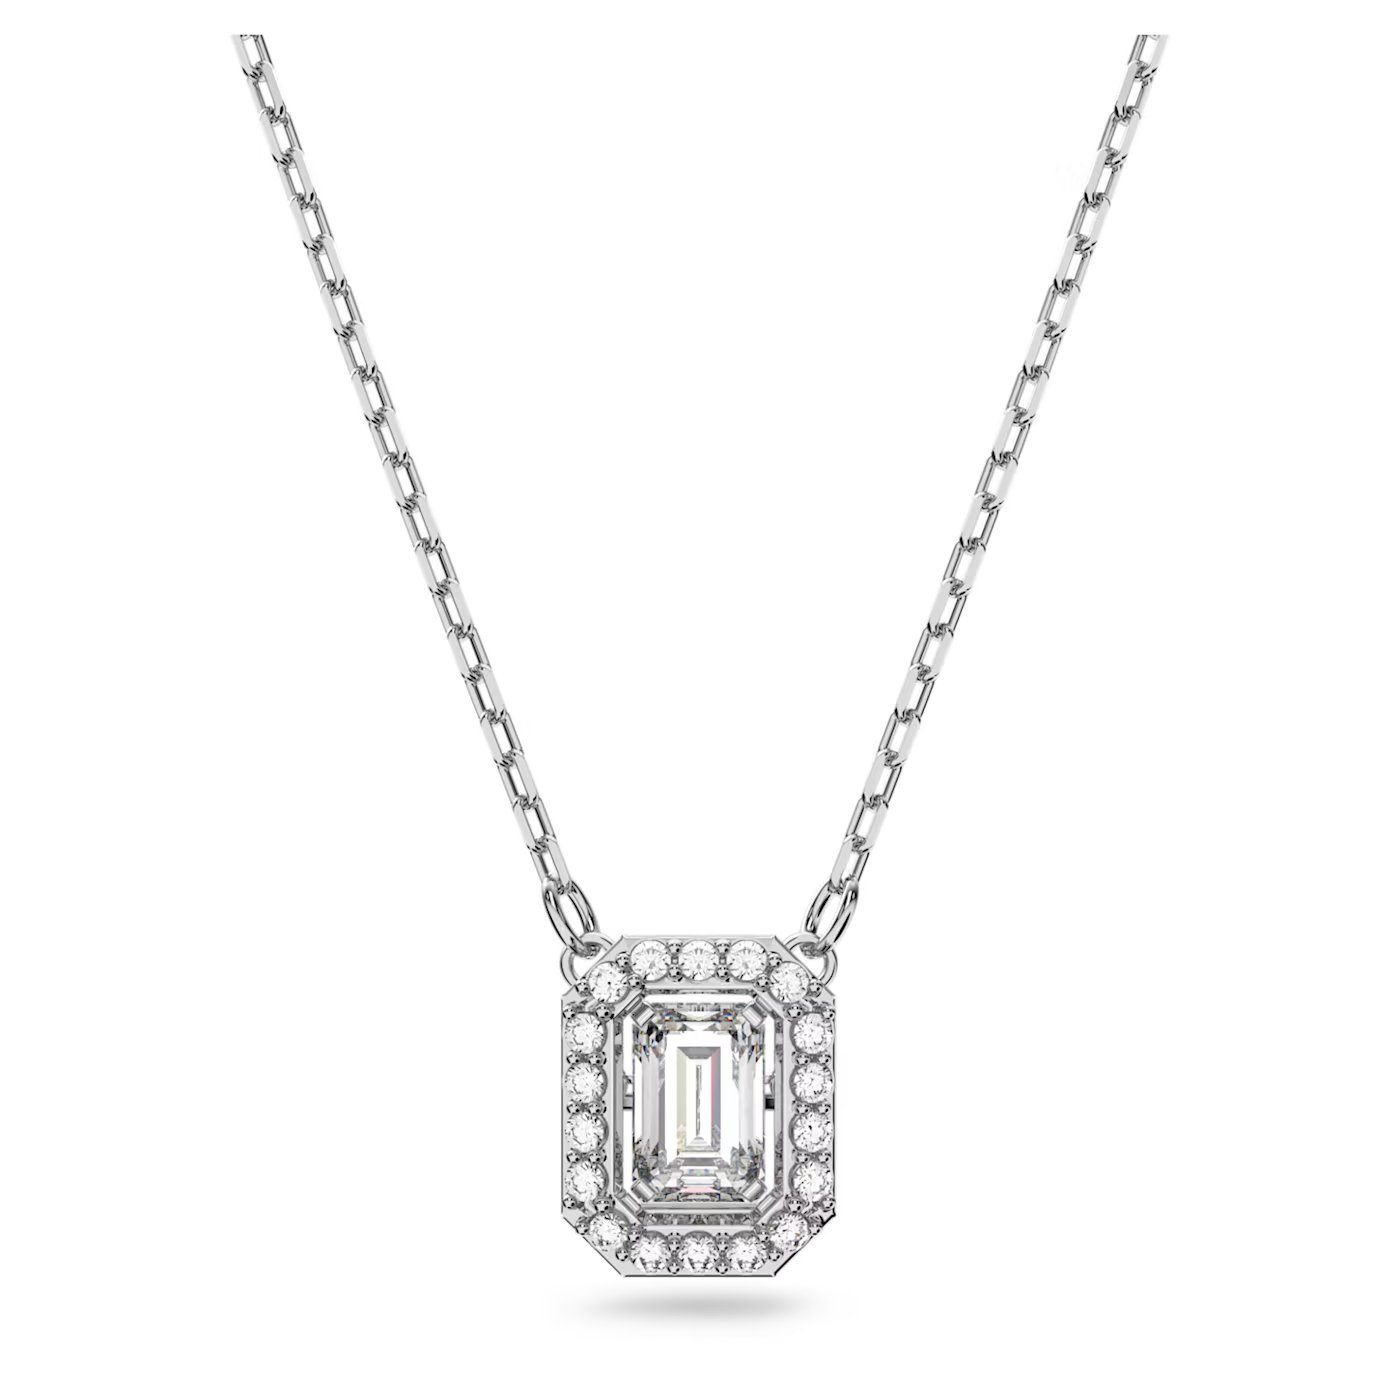 62f62fa30cf59_px-millenia-necklace--octagon-cut--white--rhodium-plated-swarovski-5599177.jpg